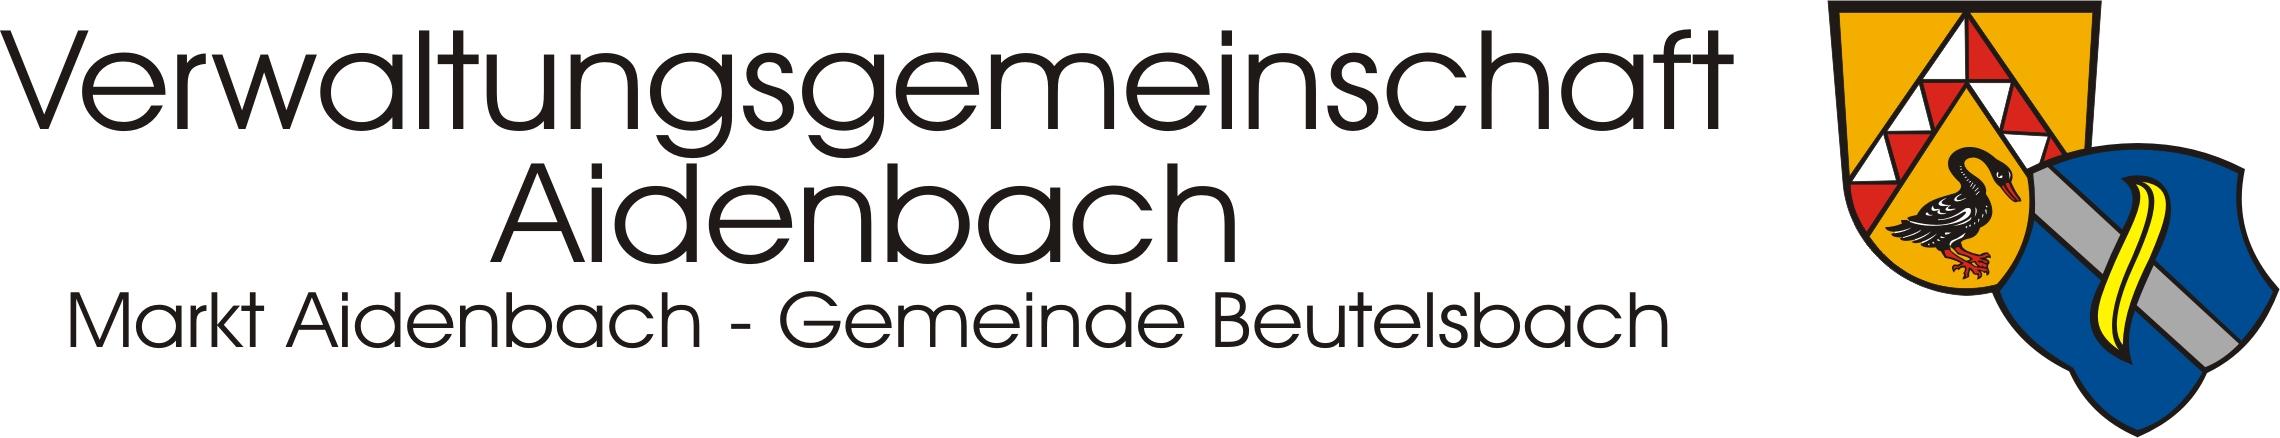 Aidenbach Logo